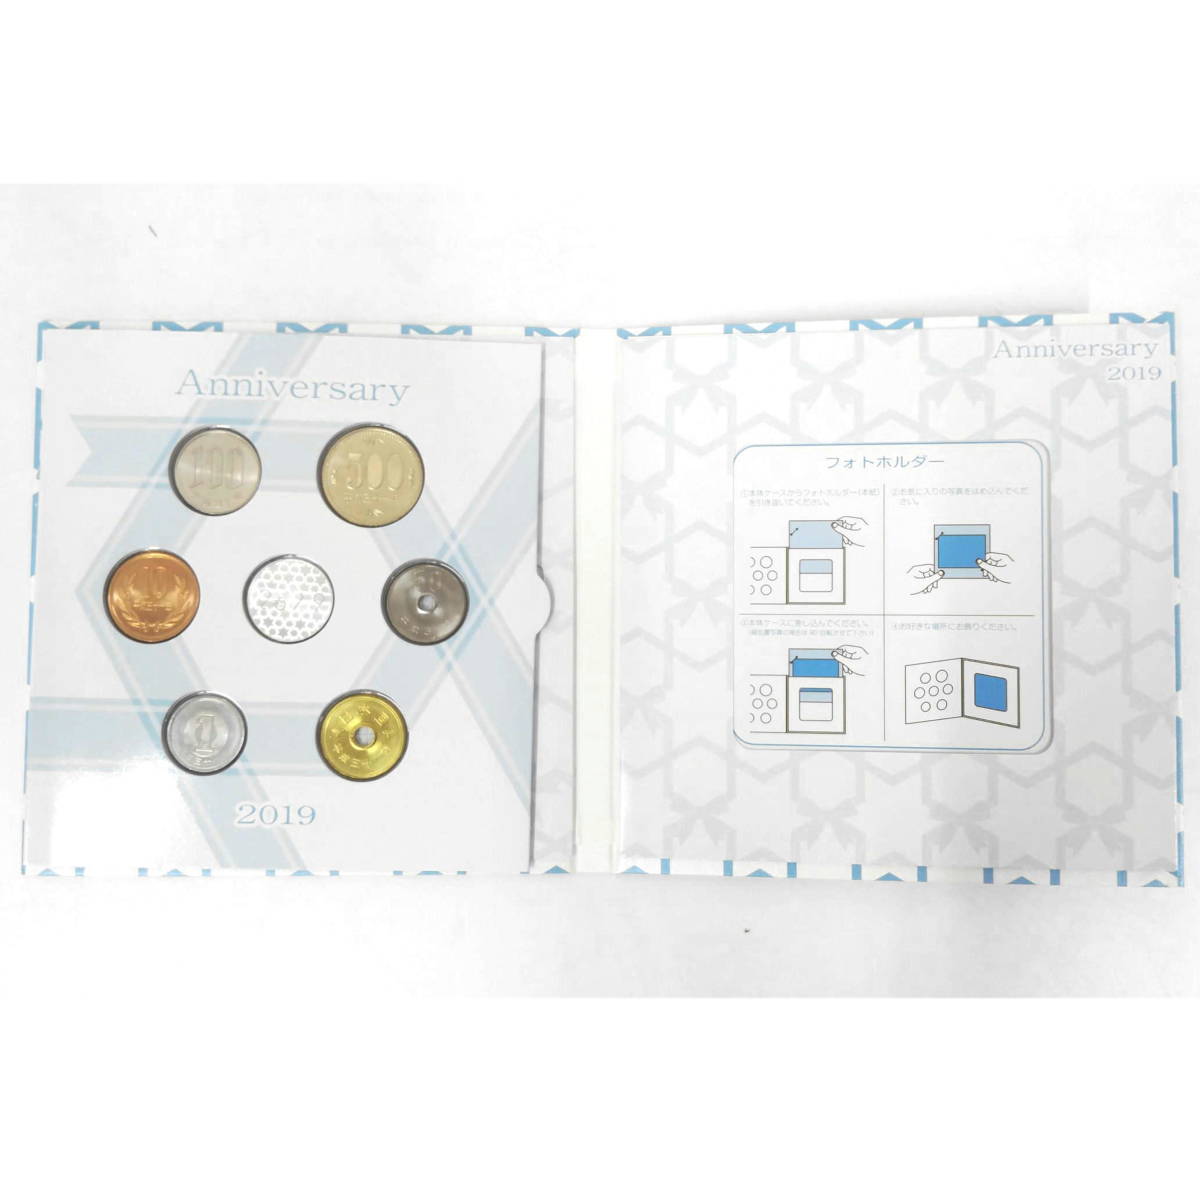 送料無料 平成31年 Anniversary Coin Set 2019 記念日貨幣セット 造幣局 JAPAN MINT_画像3